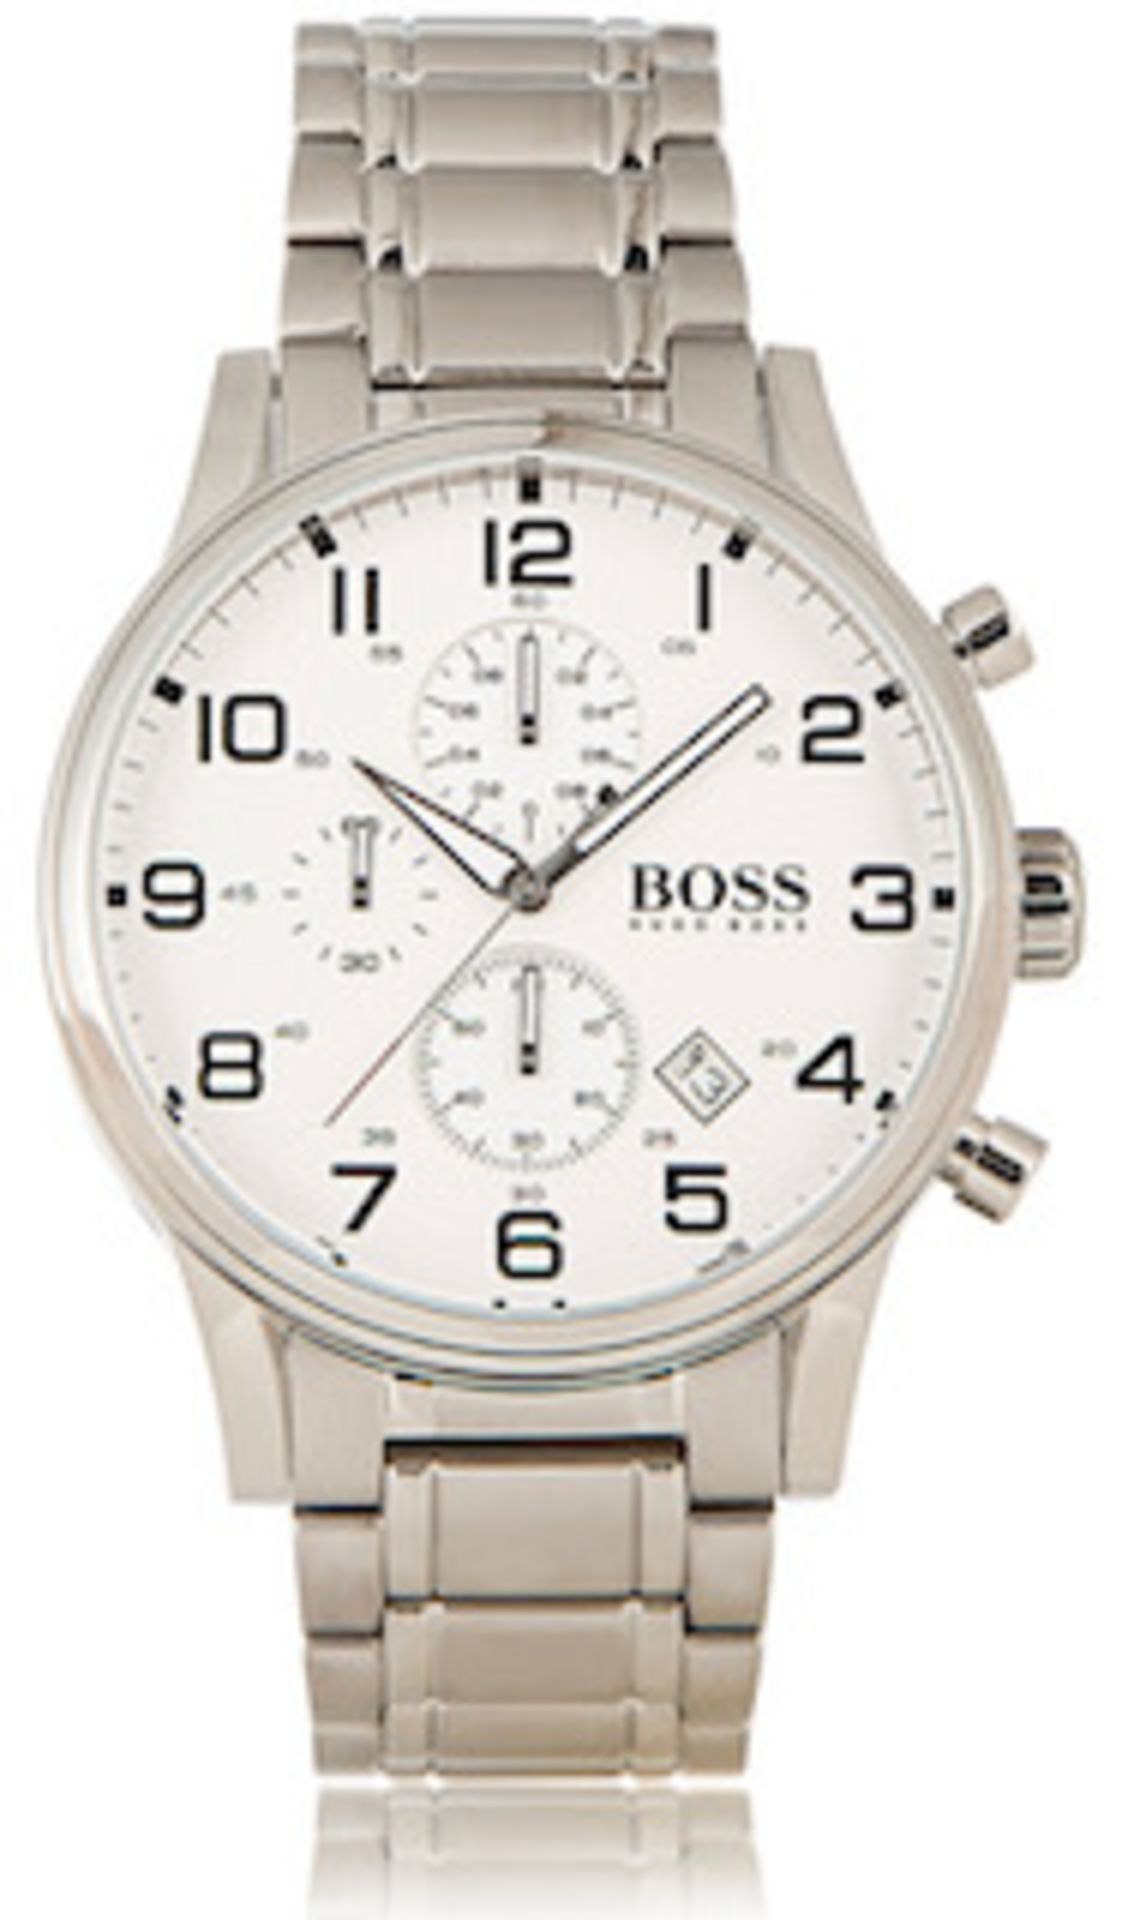 Hugo Boss Men's Aeroliner Silver Bracelet Chronograph Watch 1513182 Authentic Men's Classic - Image 4 of 7